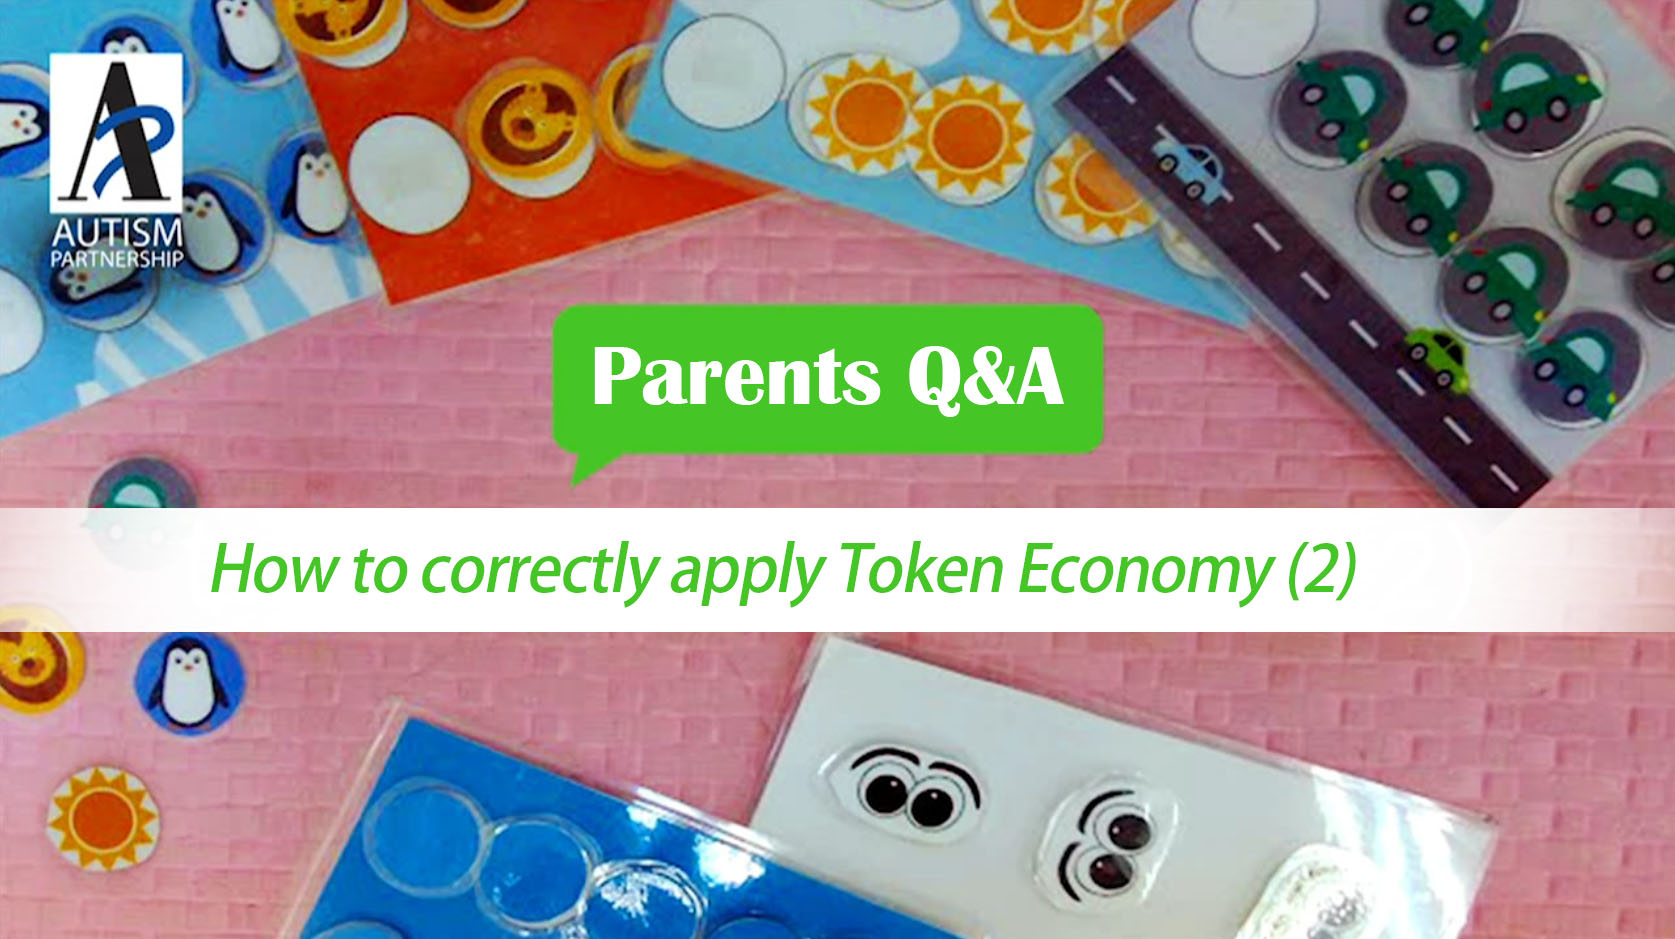 autism-partnership-parents-qa-aba-how-to-correctly-apply-token-economy-2